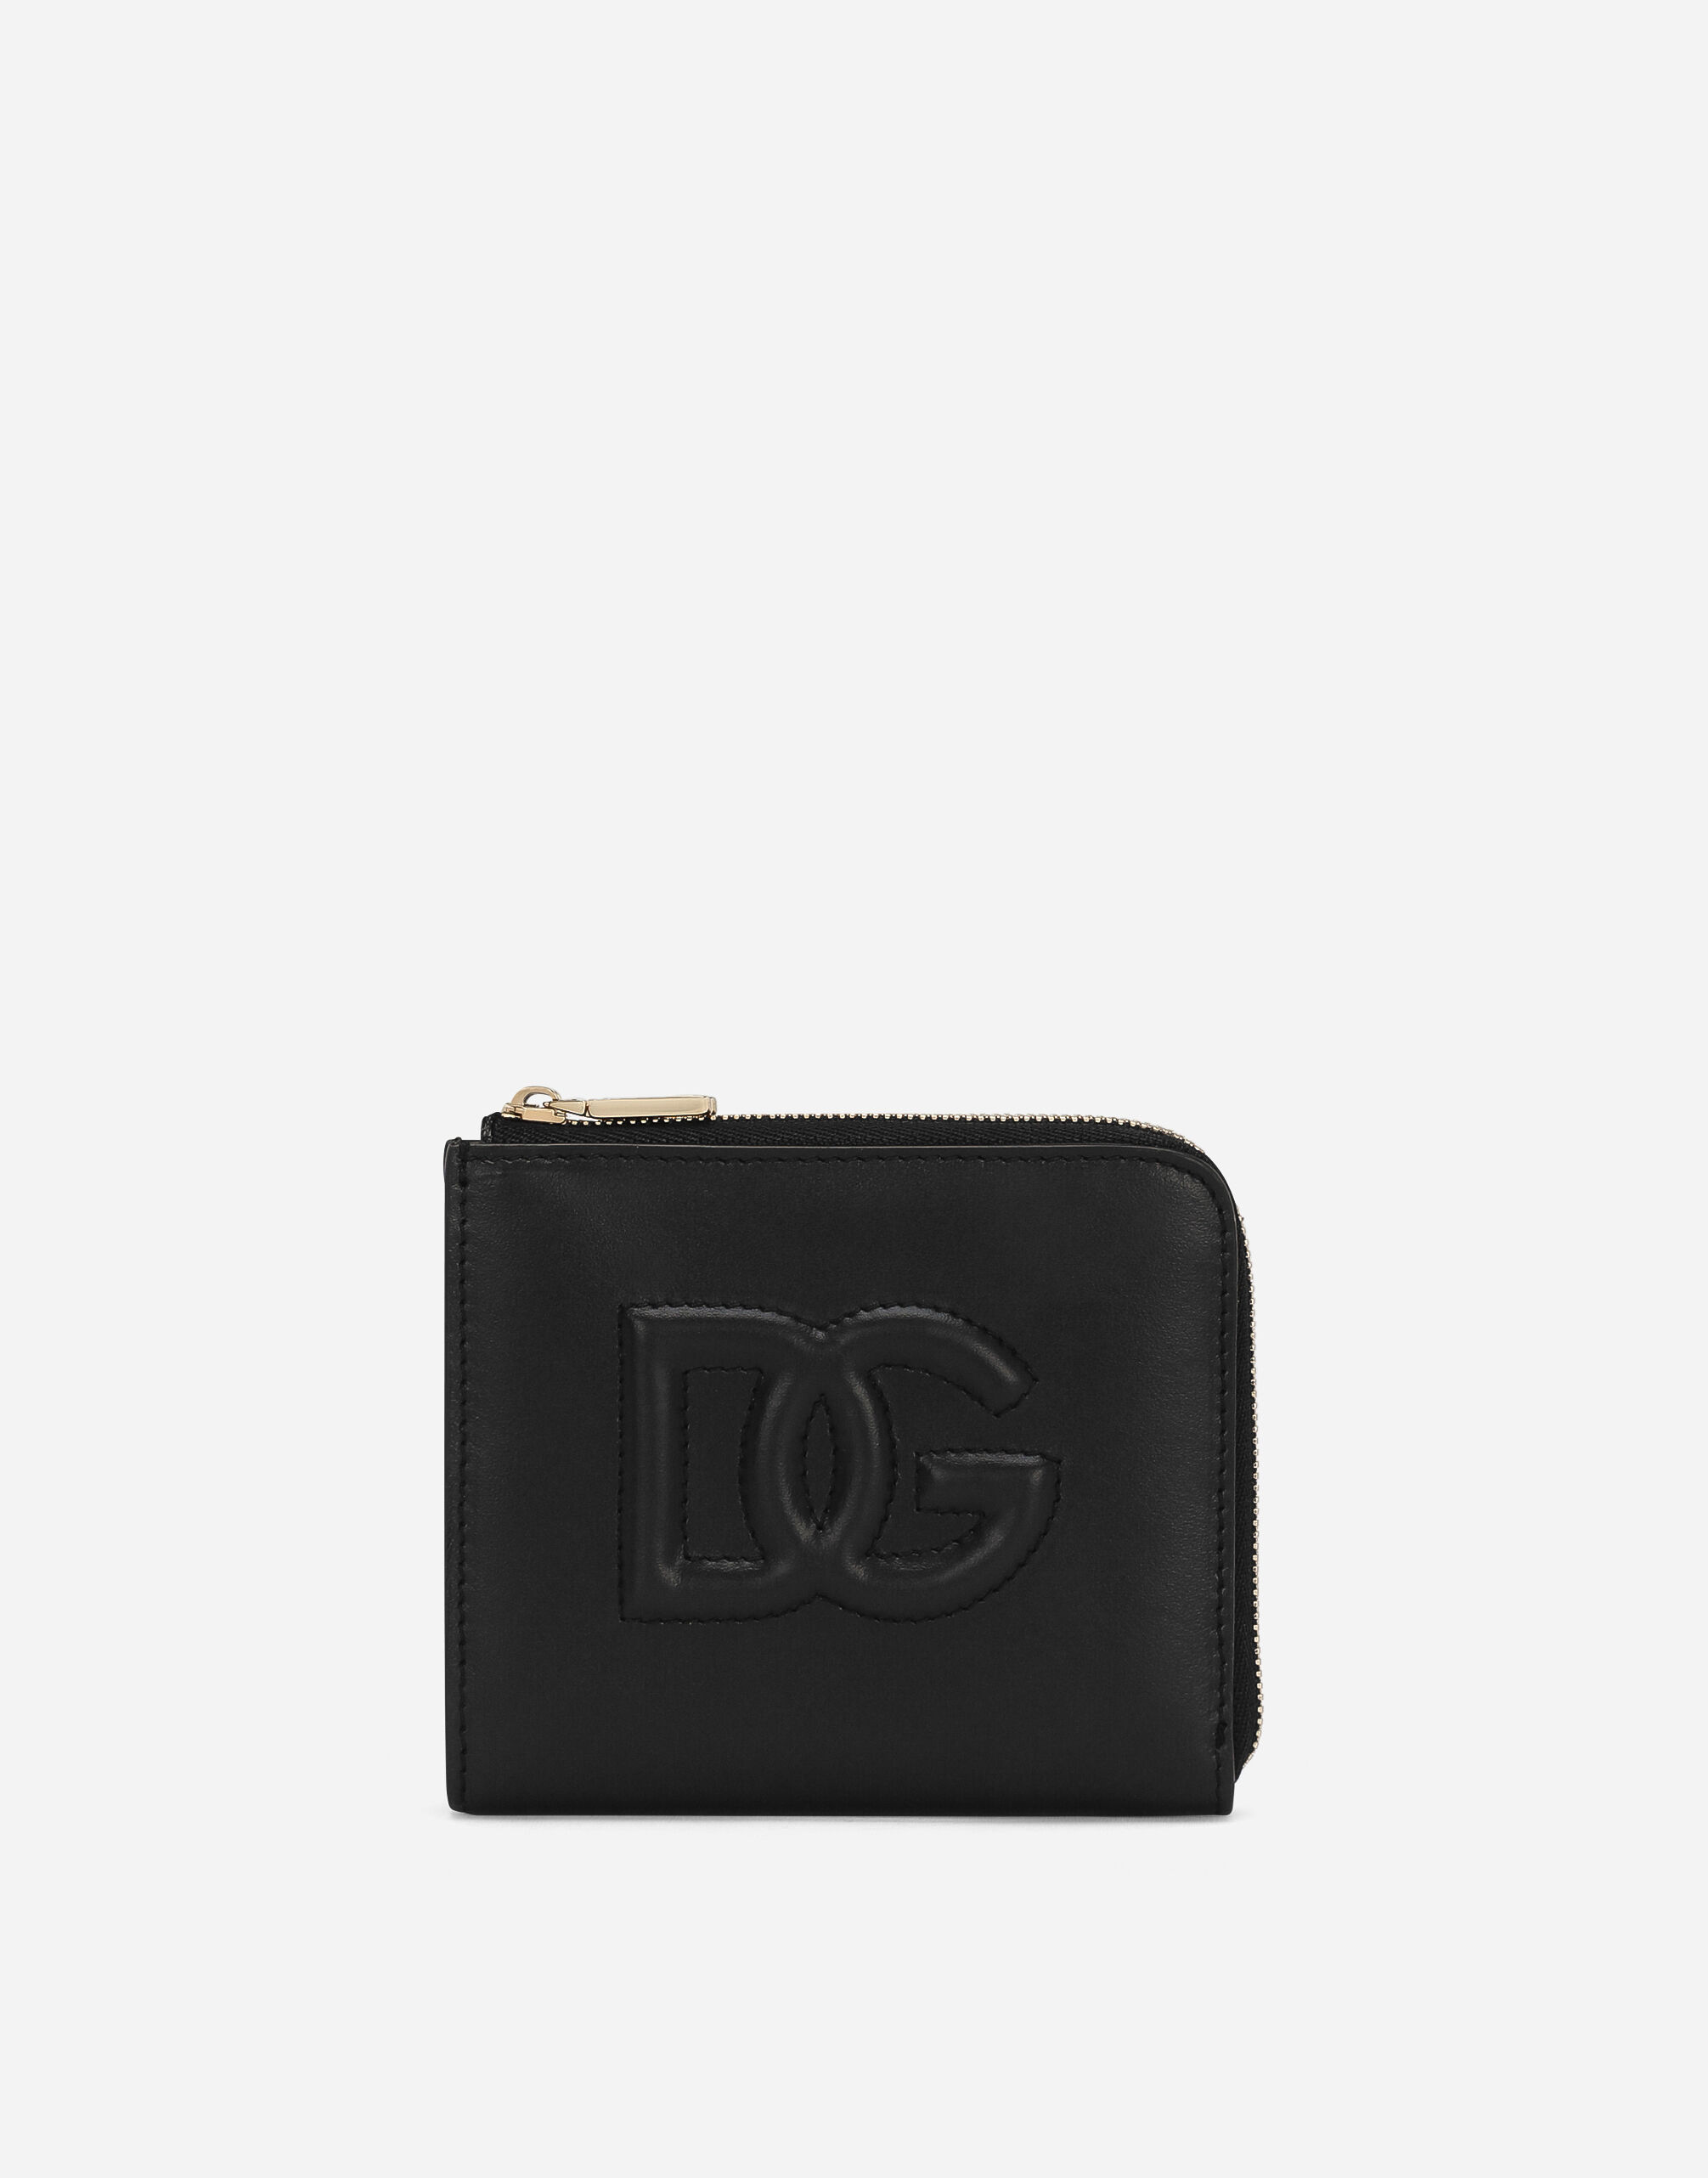 Dolce & Gabbana DGロゴ カードホルダー ブラック VG443FVP187